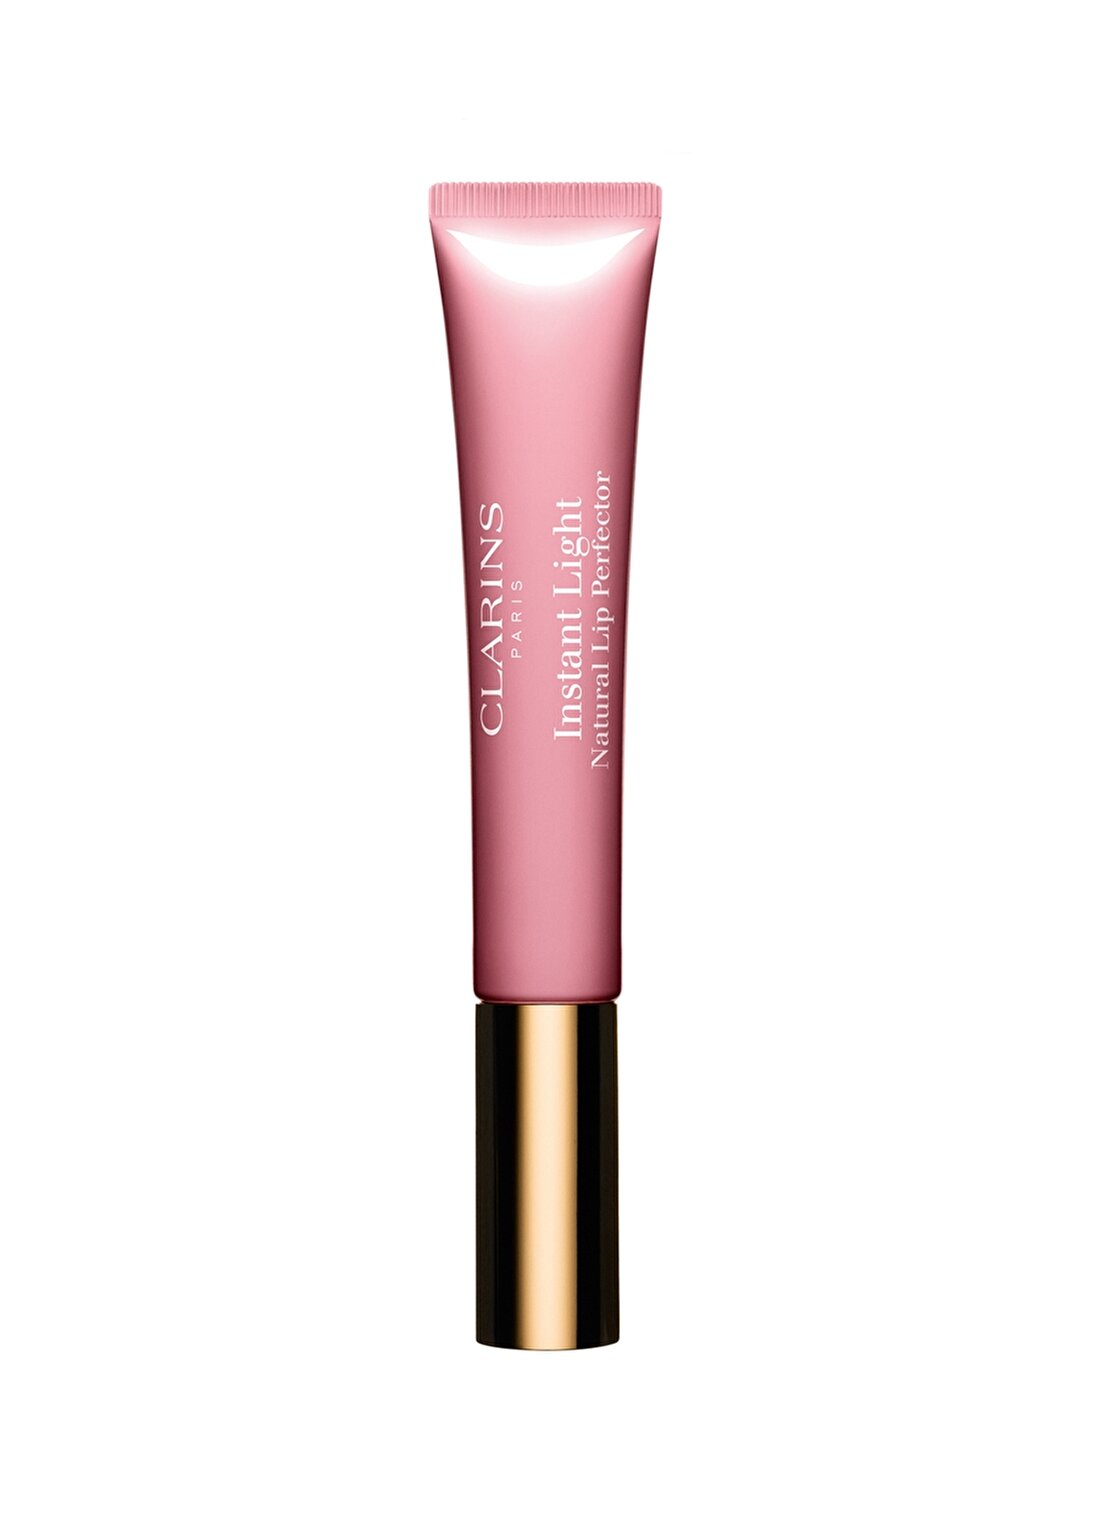 Clarins Instant Light Natural Lip Perfector 07 - Praline Shimmer Ruj